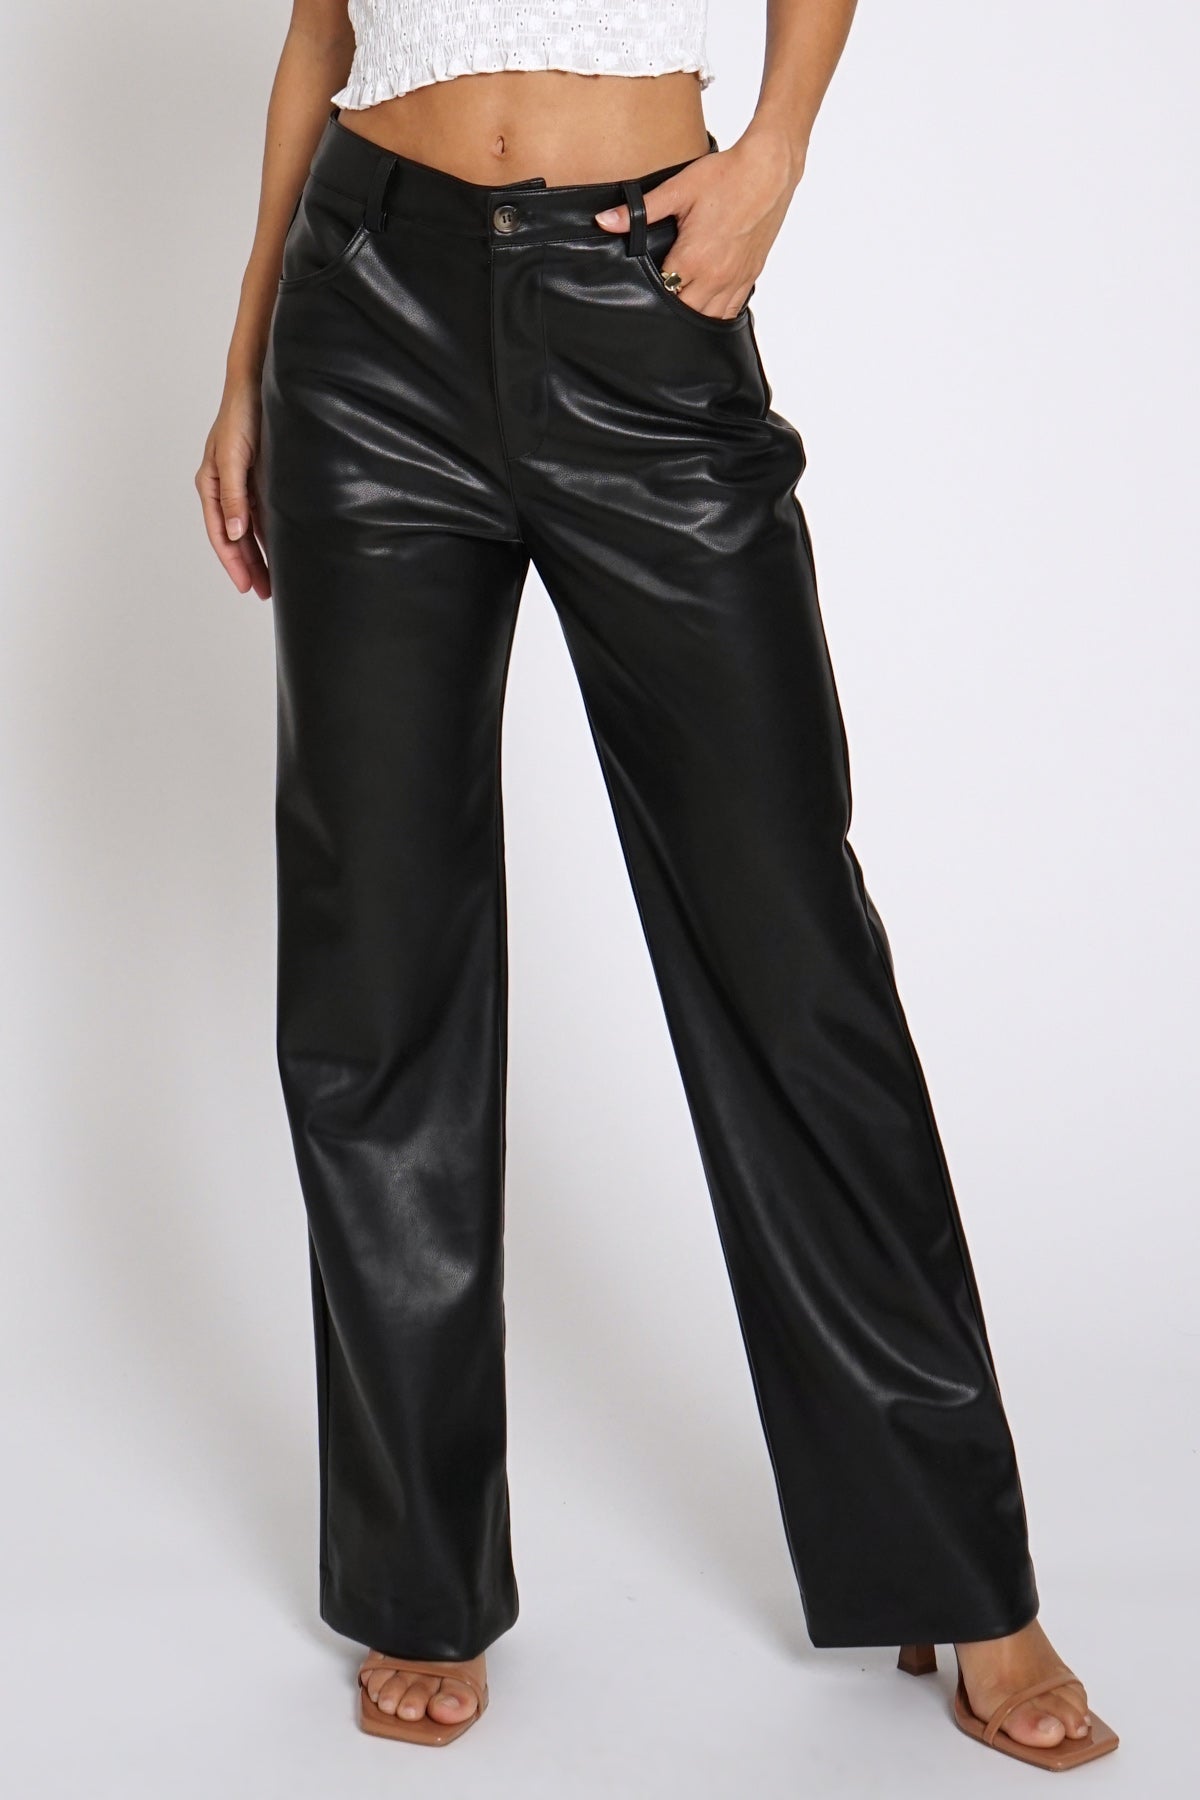 Essie Faux Leather Pants